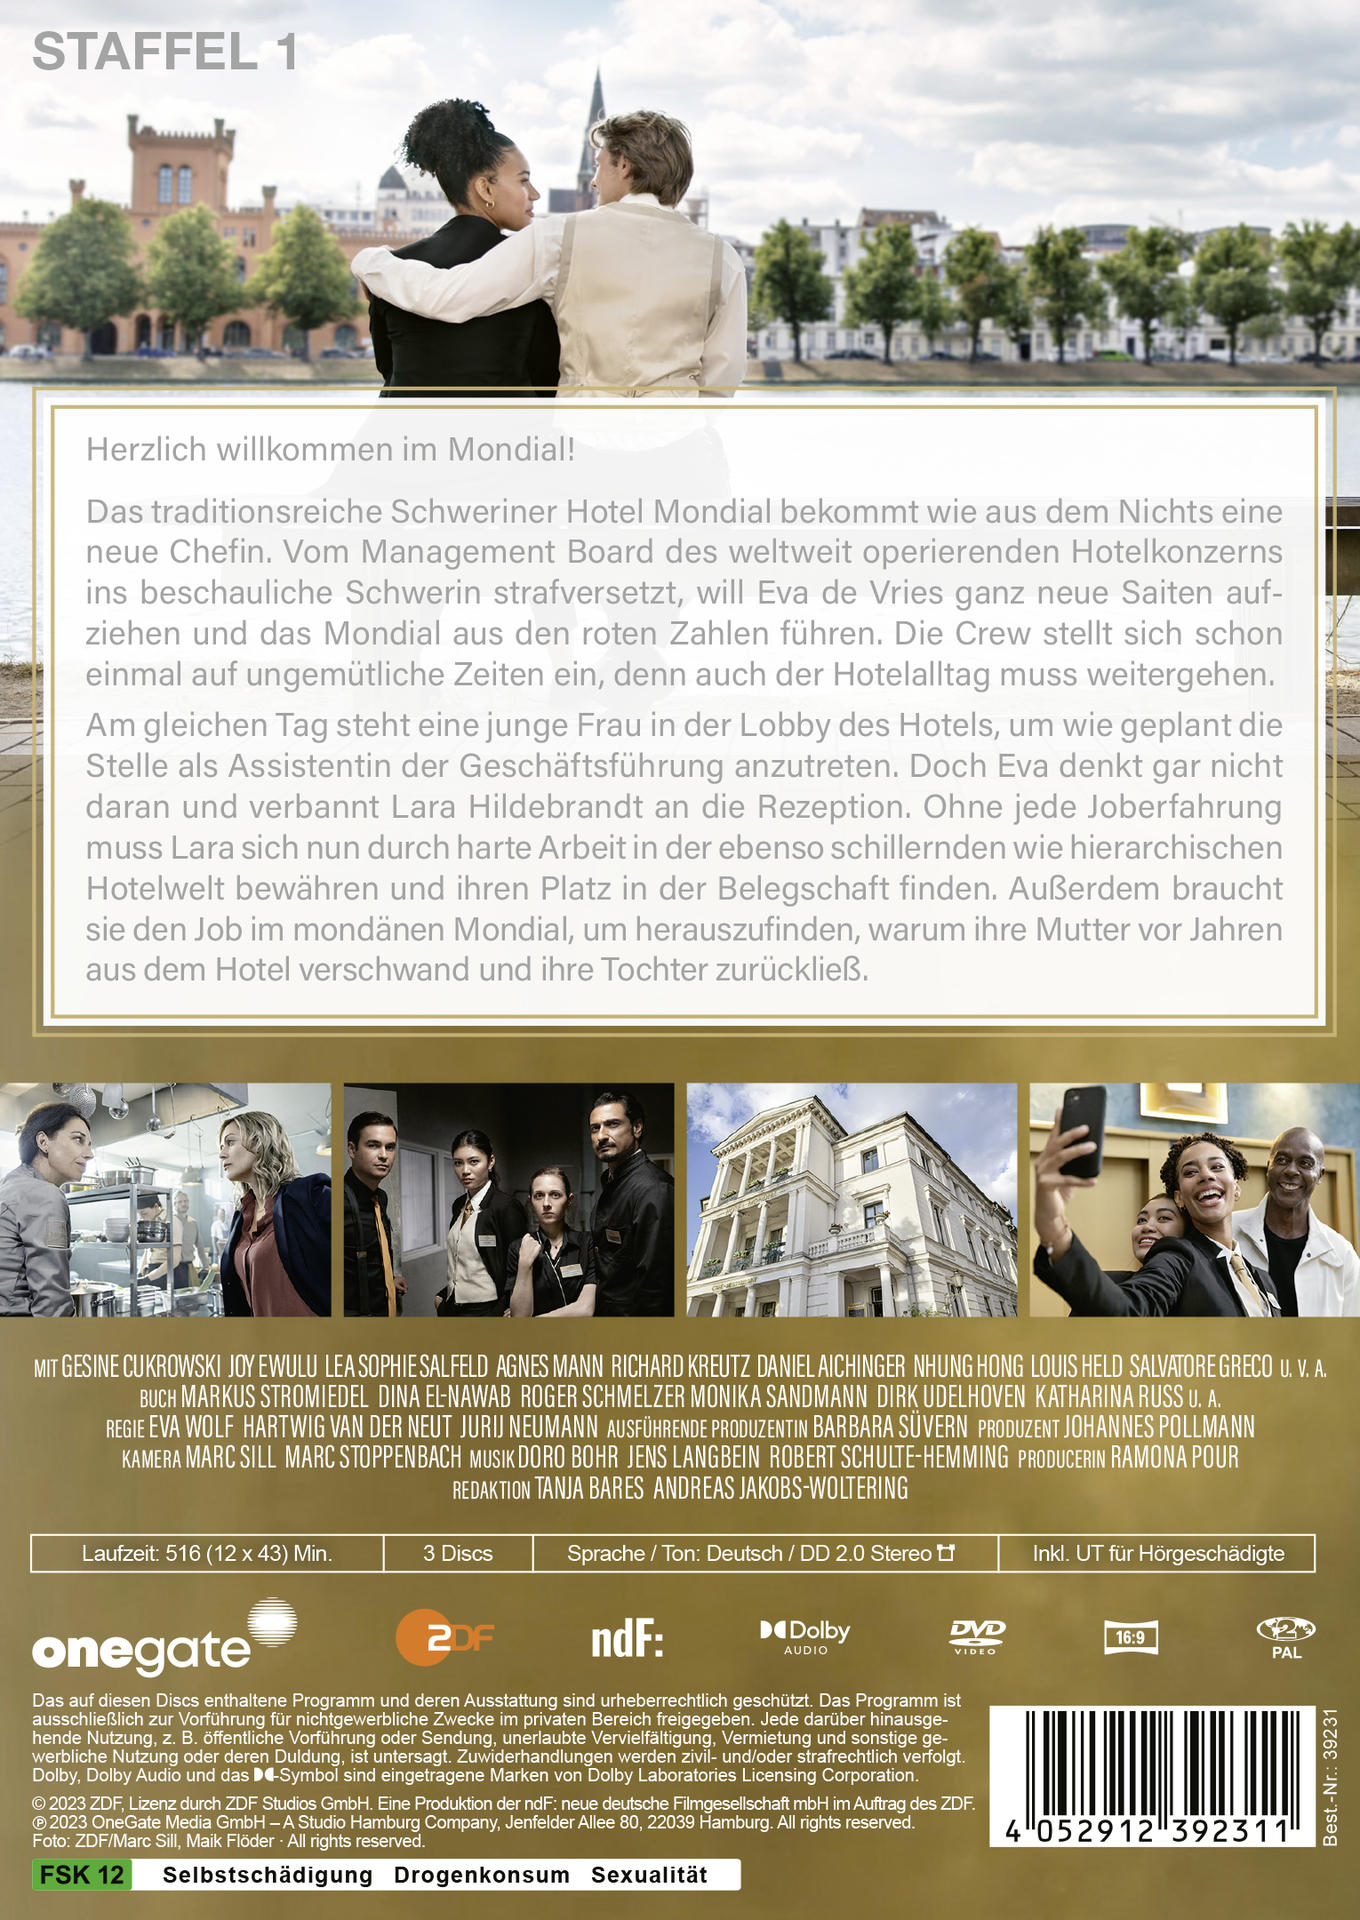 Hotel Mondial - Staffel 1 DVD